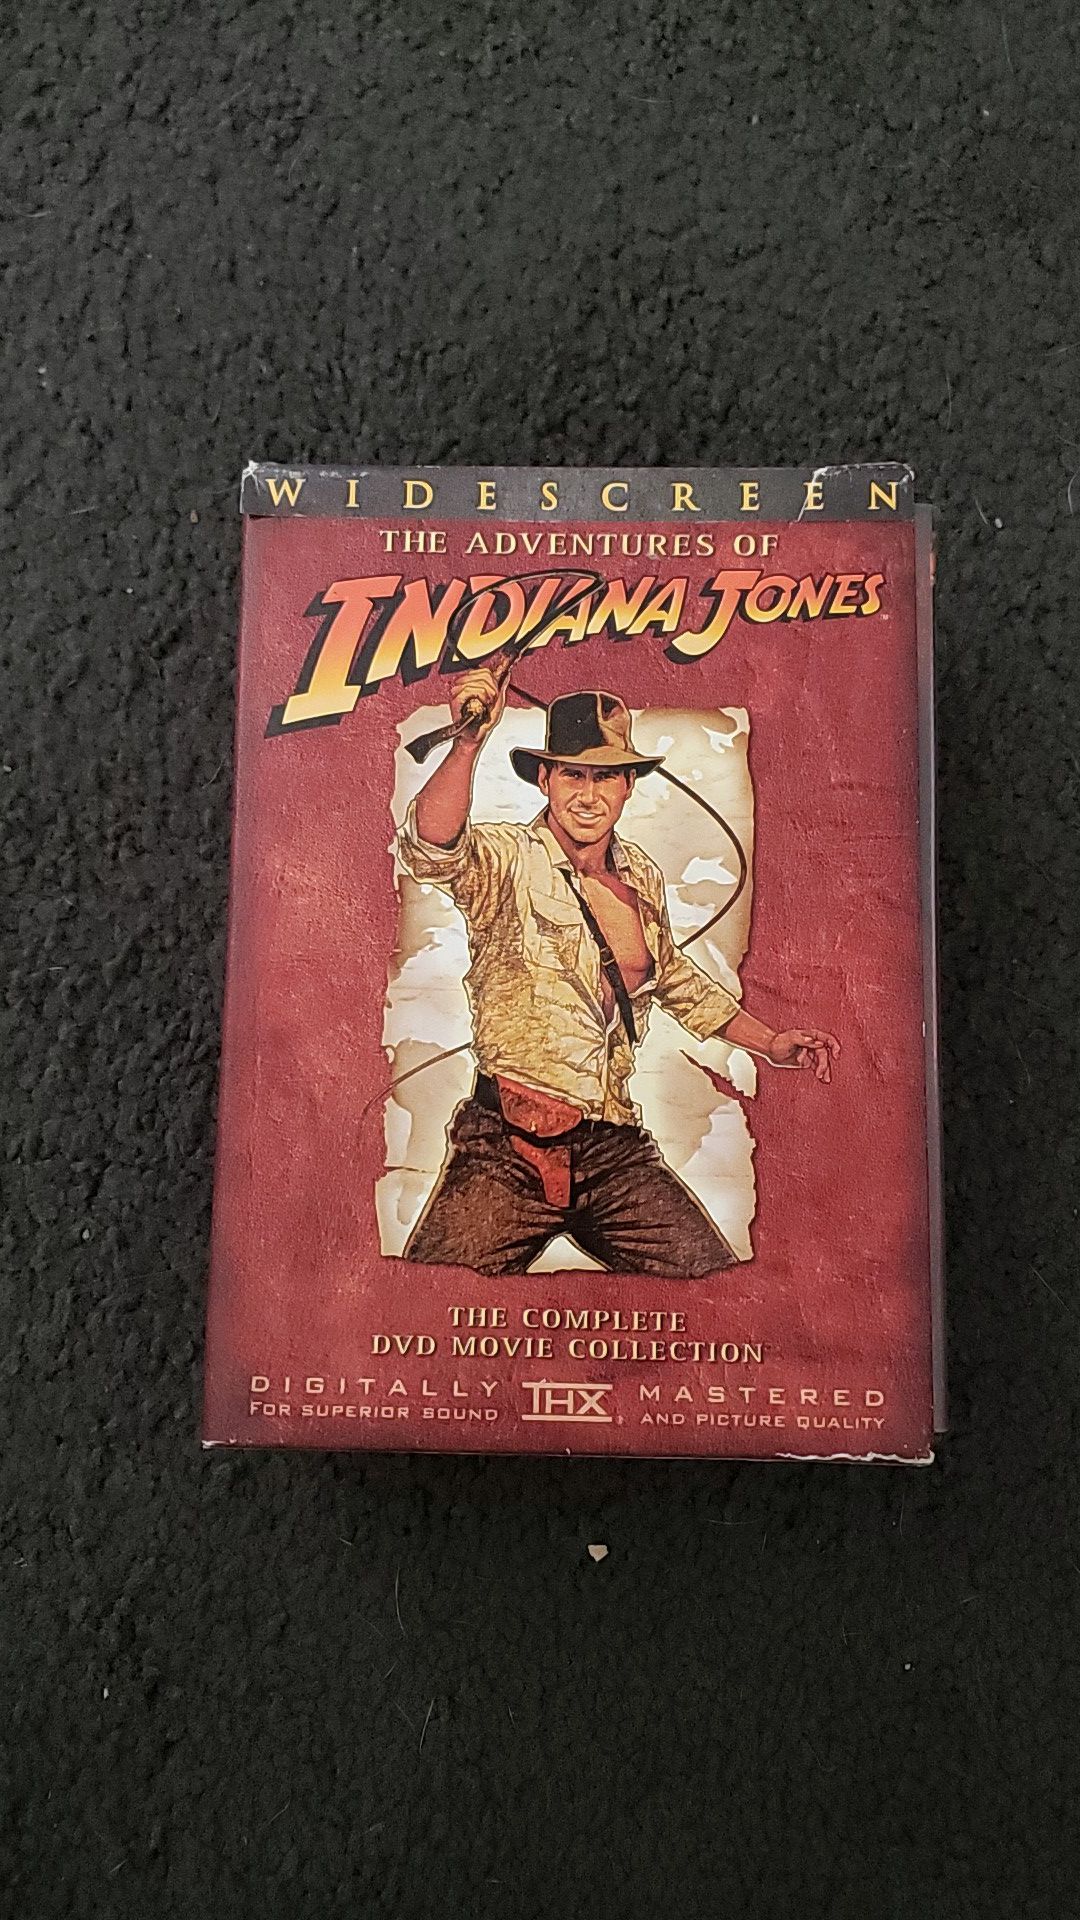 The Adventures of Indiana Jones Trilogy box set - Widescreen Edition THX